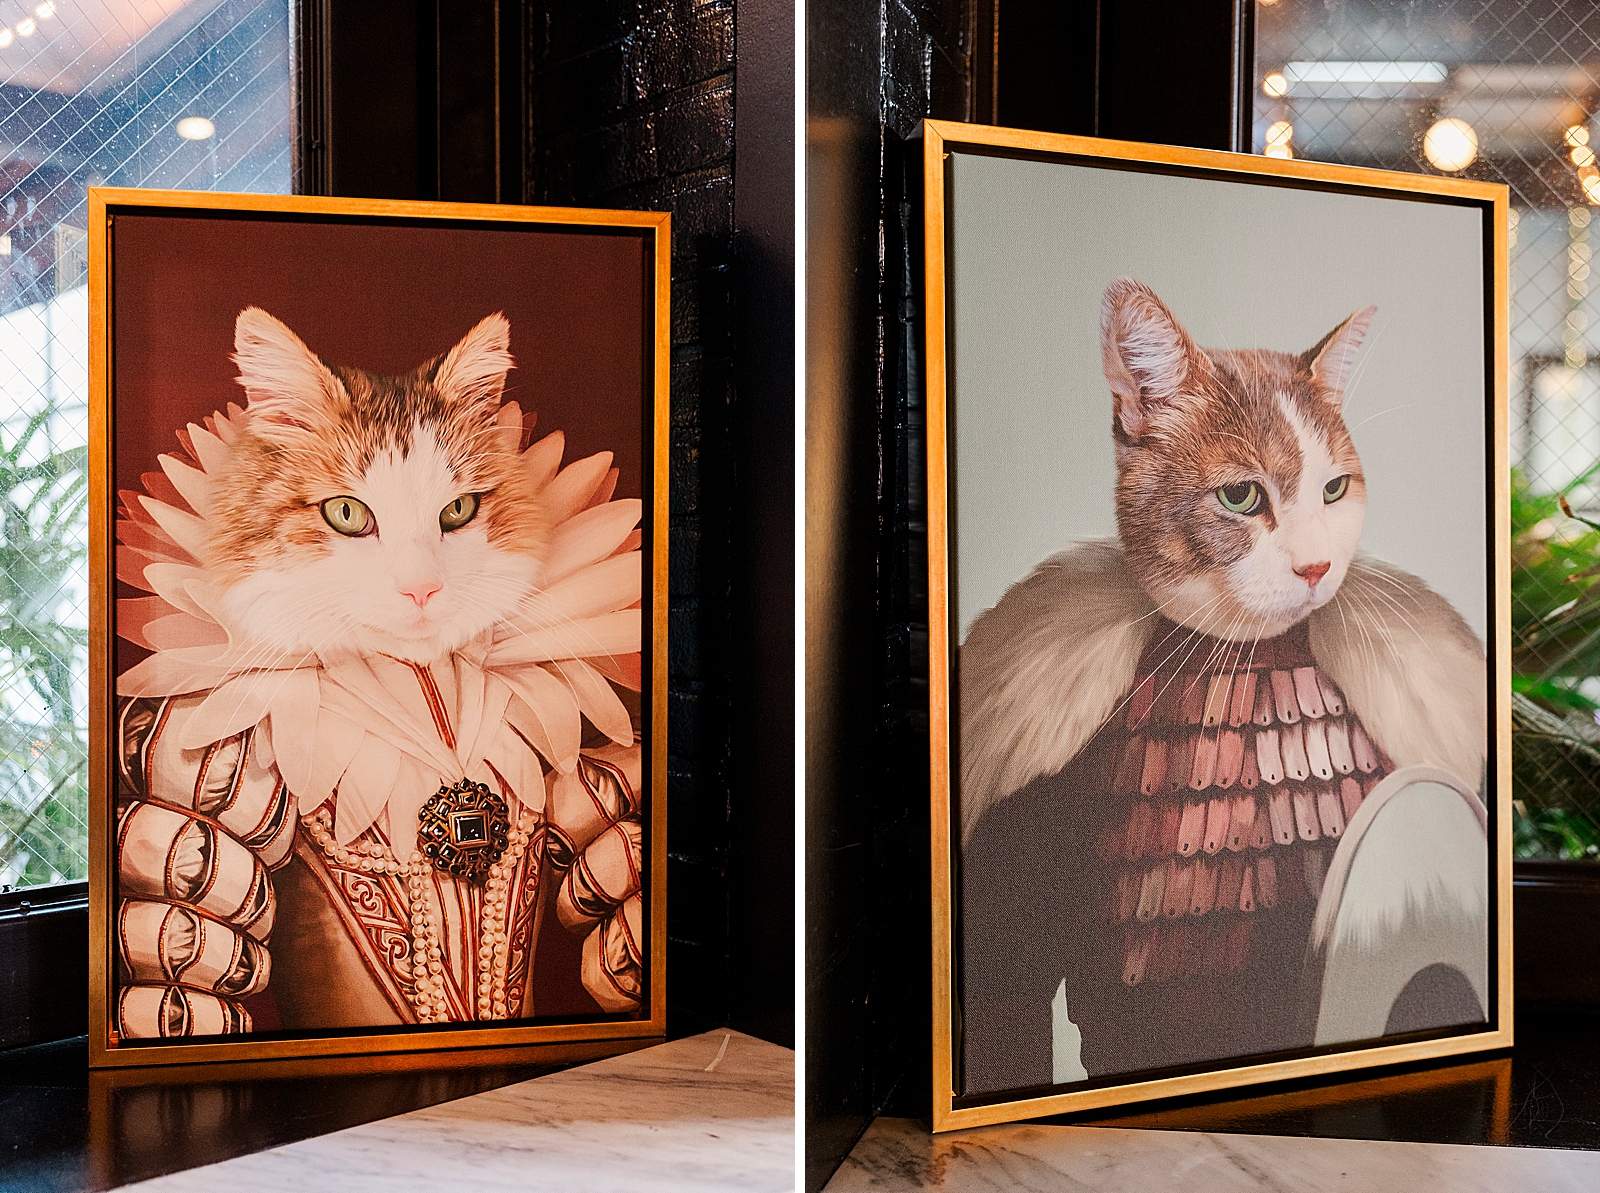 Left photo: Shot of a portrait of the couple's cat dressed in regency wear.
Right photo: Shot of a portrait of the couple's cat dressed in regency wear. 